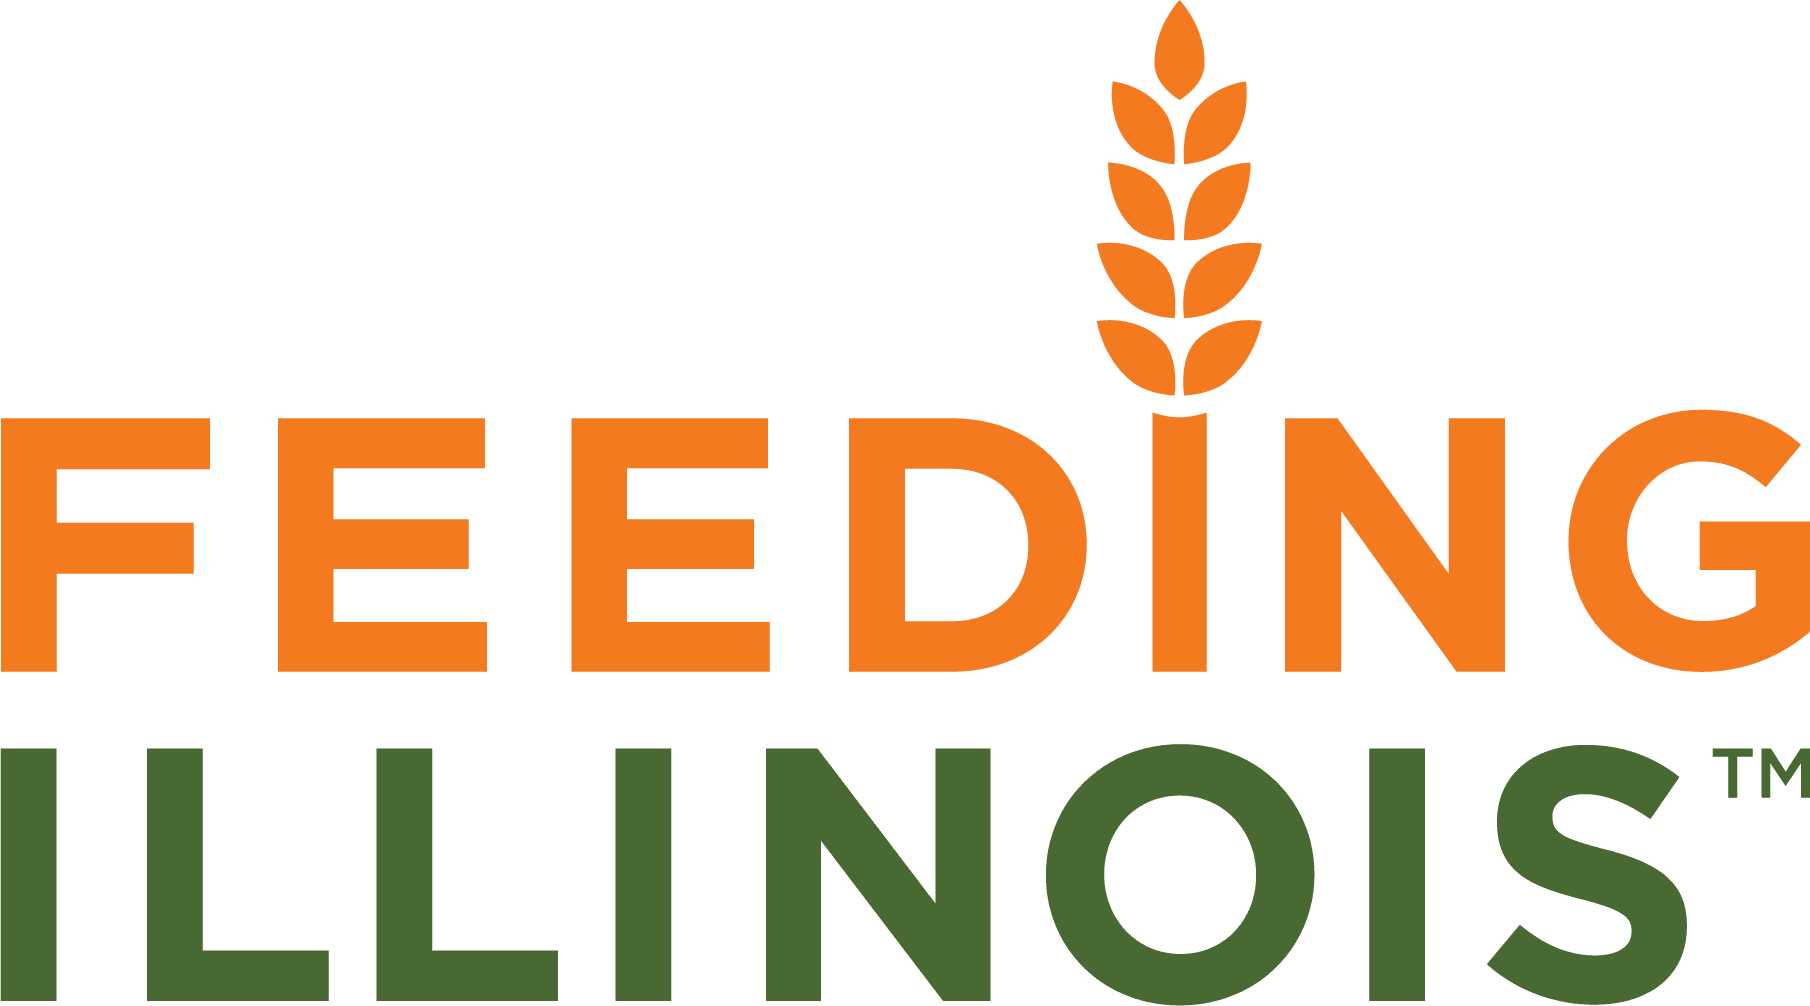 Feeding Illinois